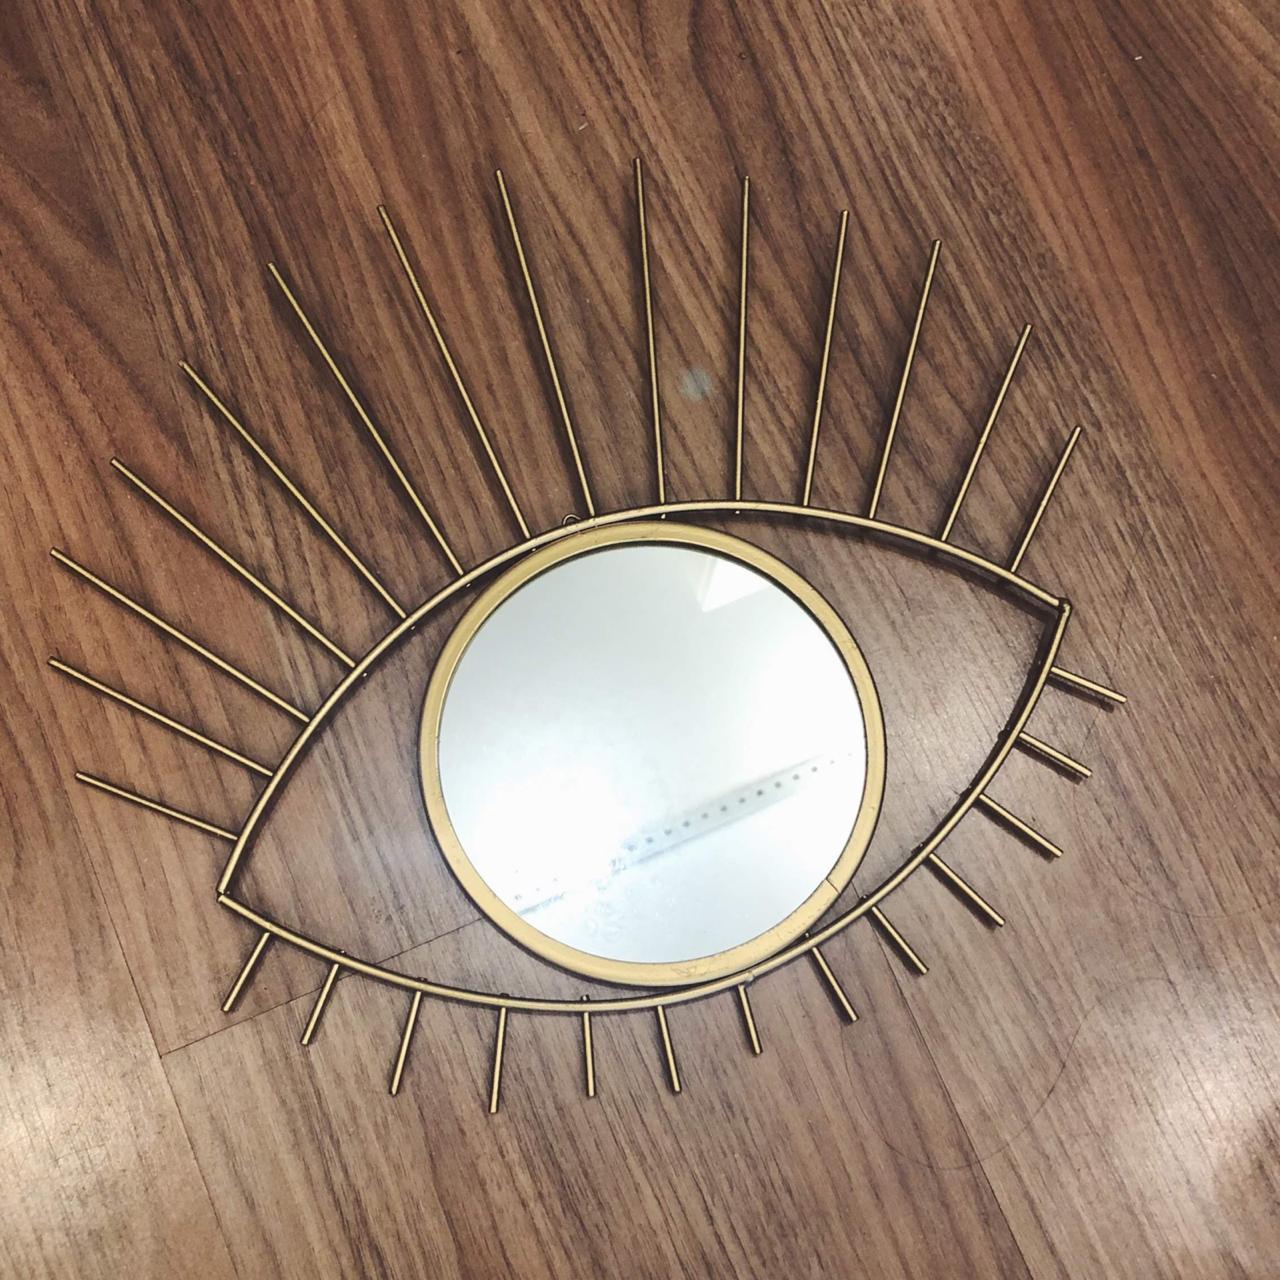 espelho golden eye